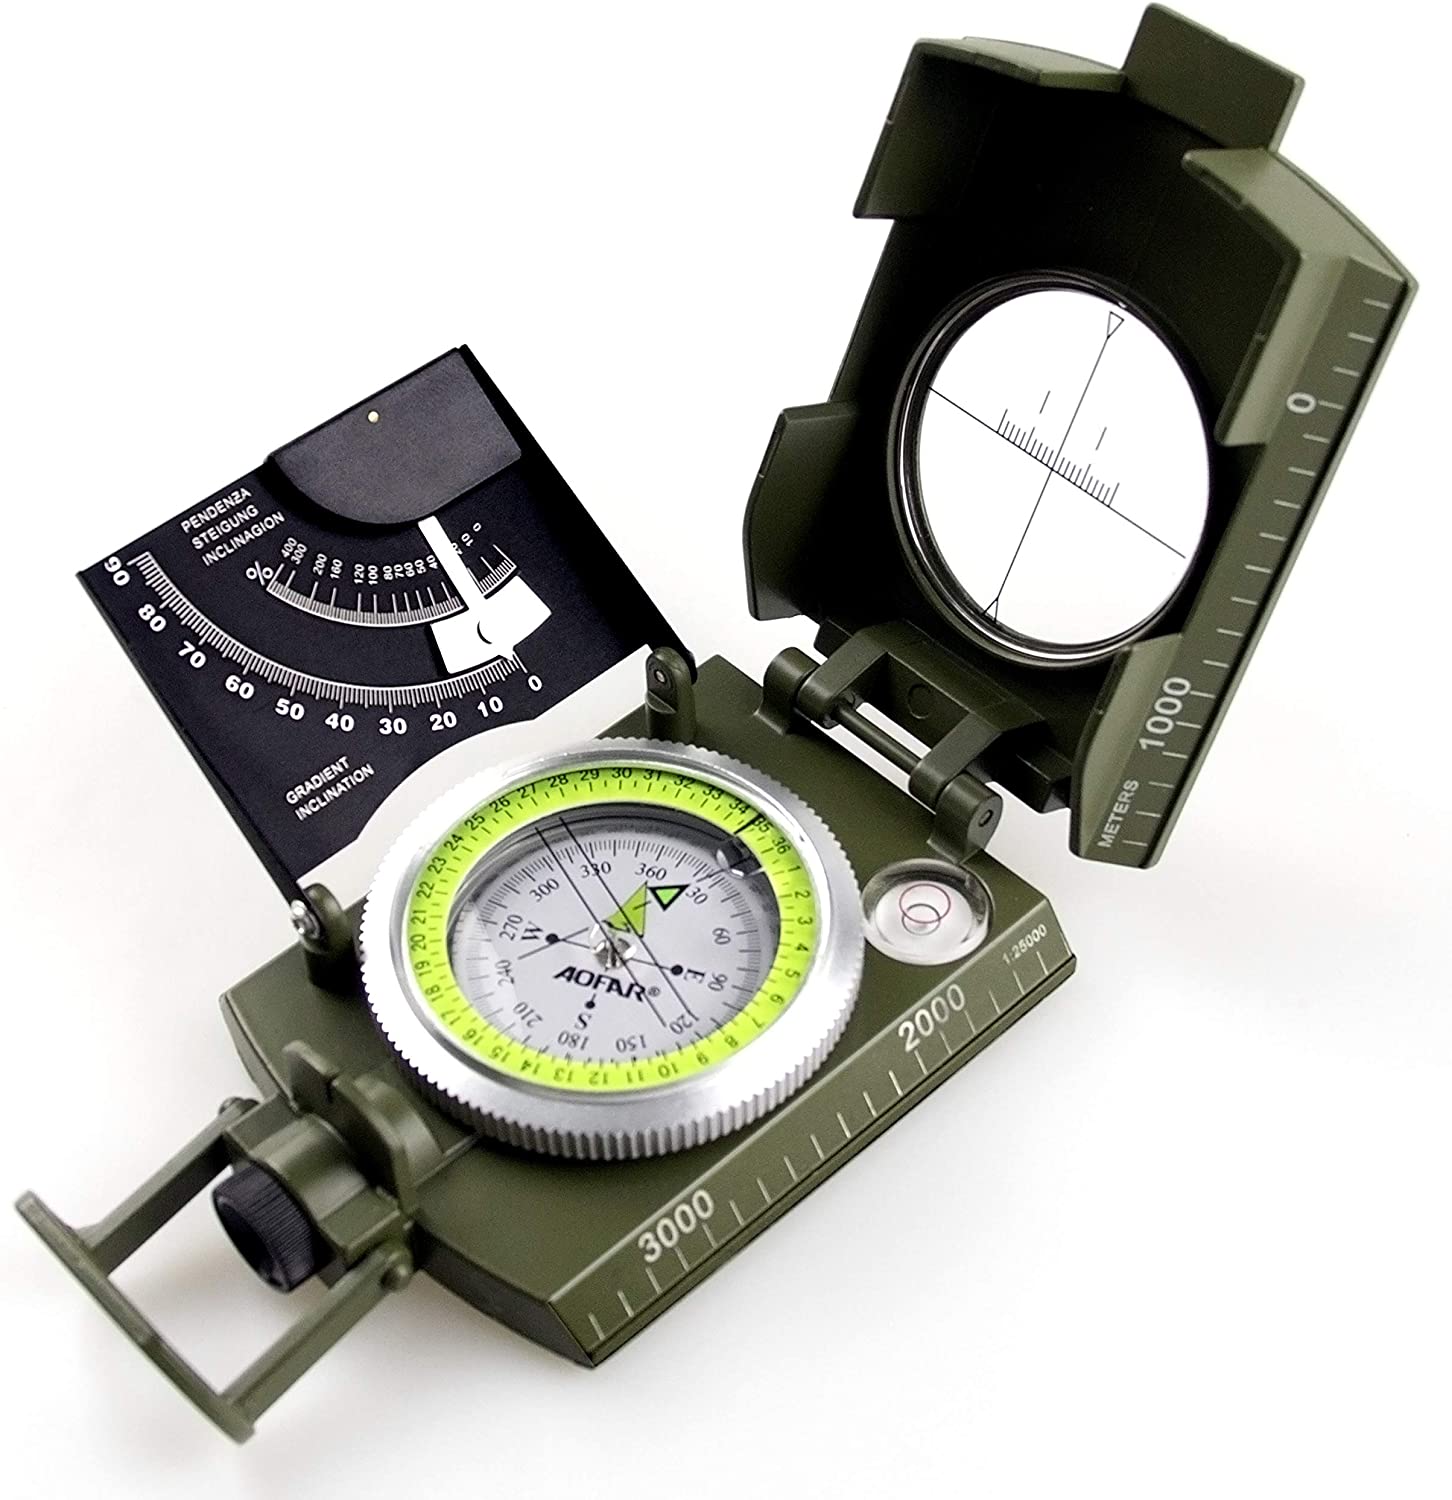 AOFAR AF-4074 Military Compass for Hiking,Lensatic [...]